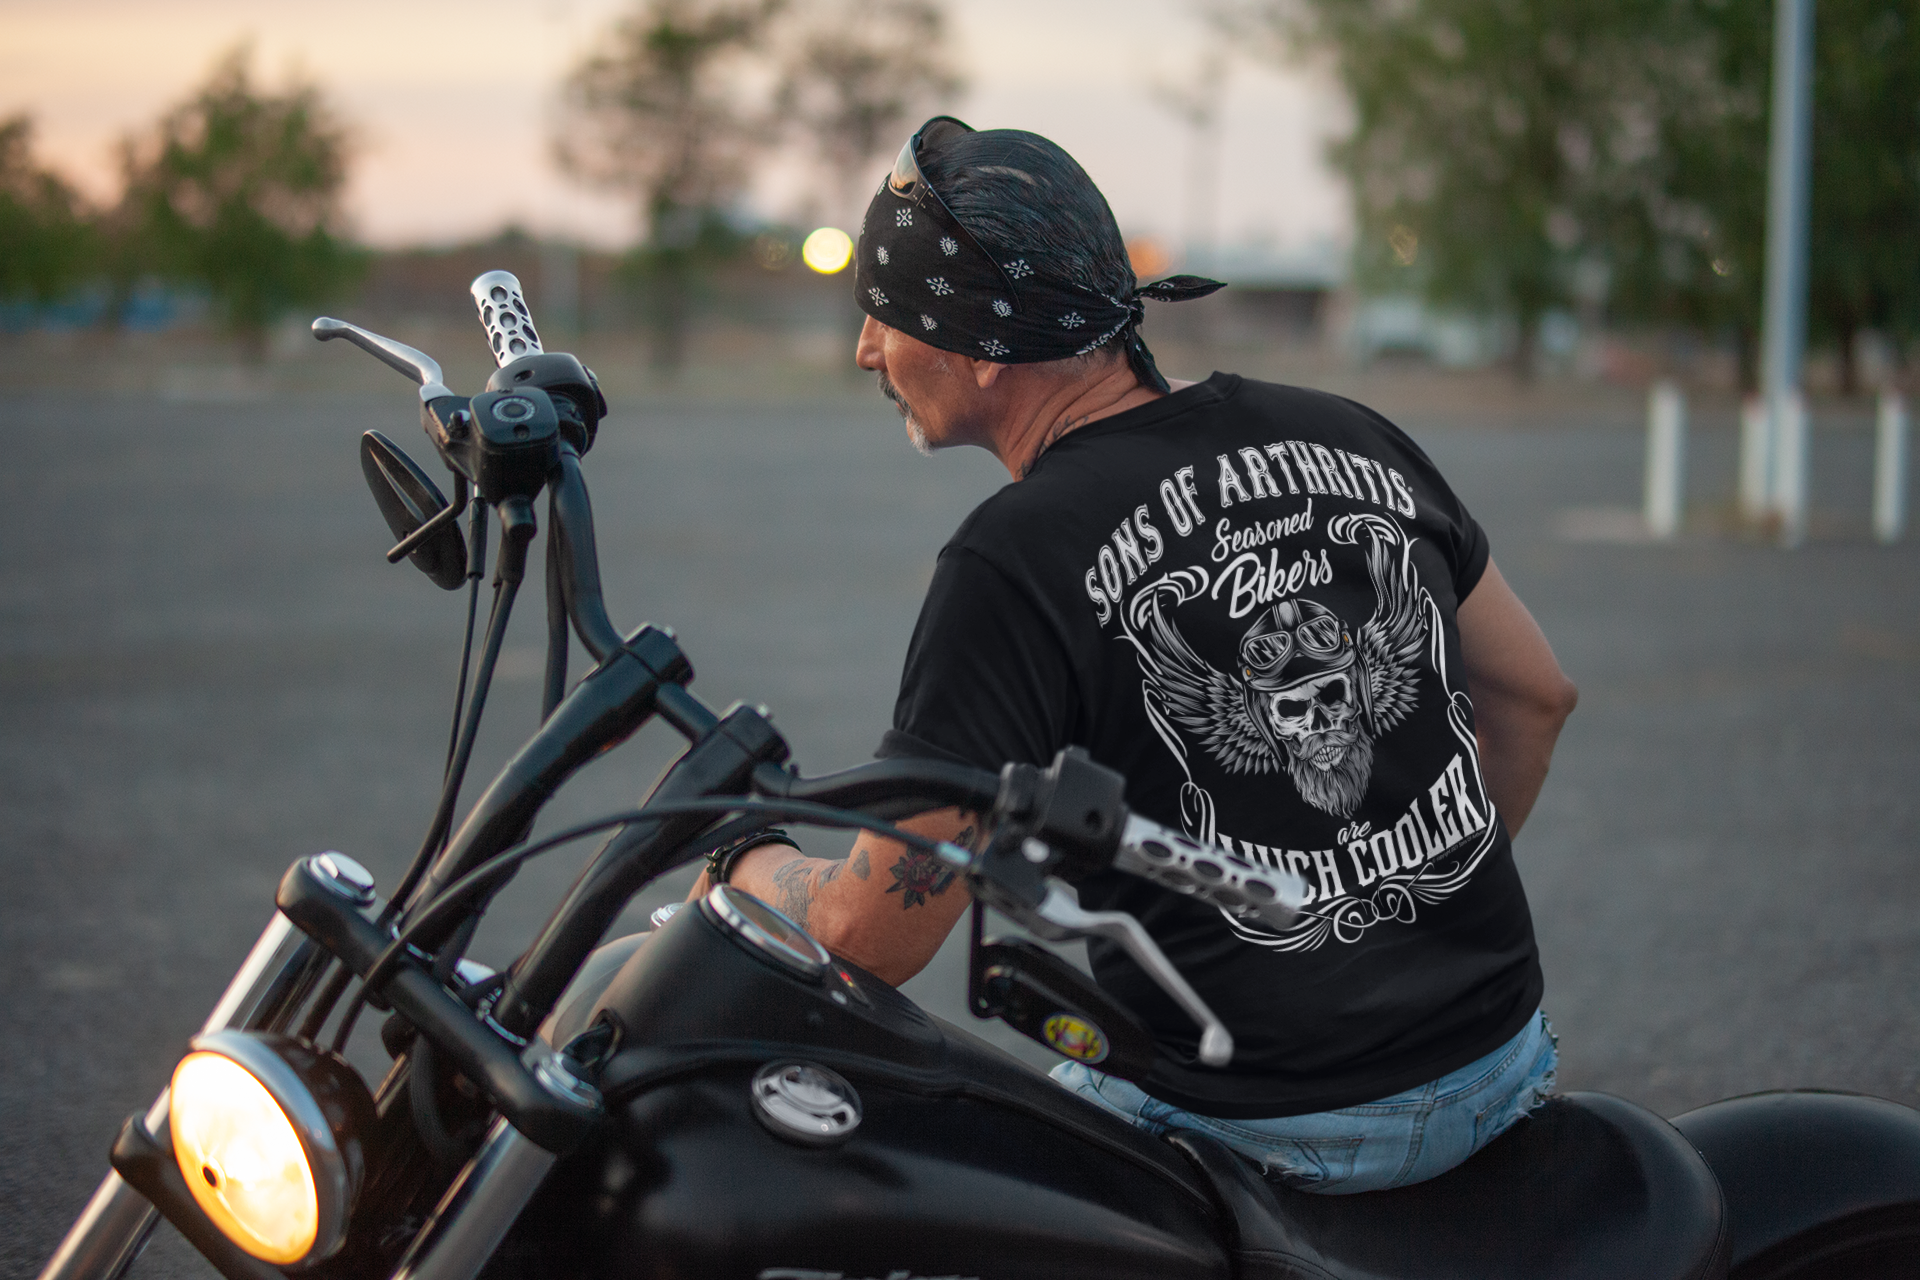 Sons of Arthritis Seasoned Biker Black Pocket Short Sleeve 100% Cotton